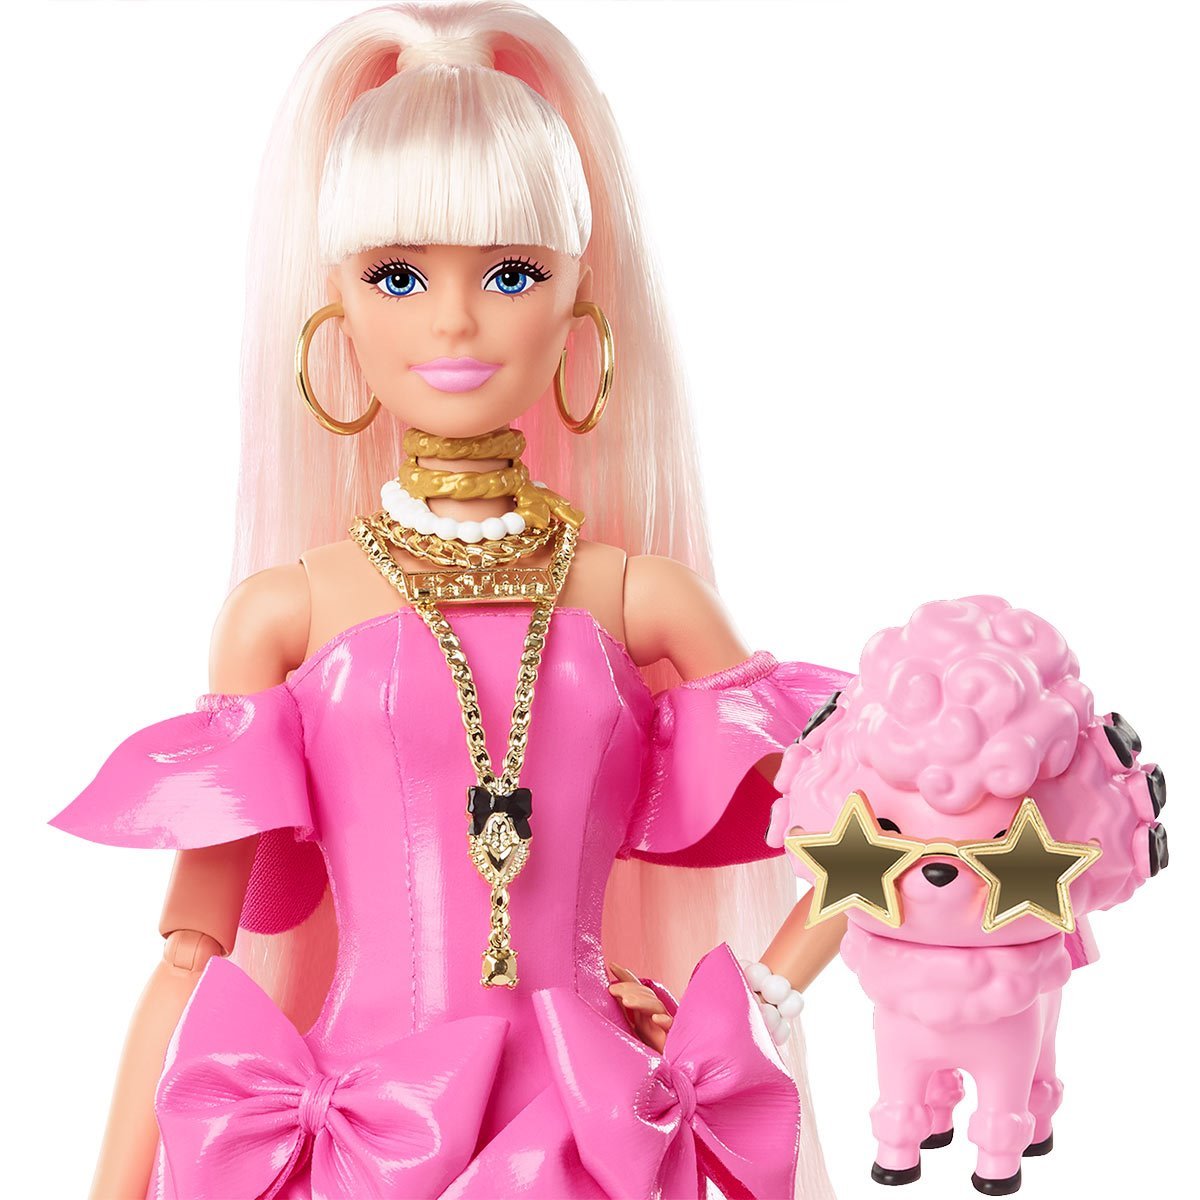 Барби Роуз. Барби Экстра Fancy. Кукла Barbie Extra Fancy в розовом платье, hhn12. Hhn14 кукла Barbie Extra Fancy пышка. Розовая куколка